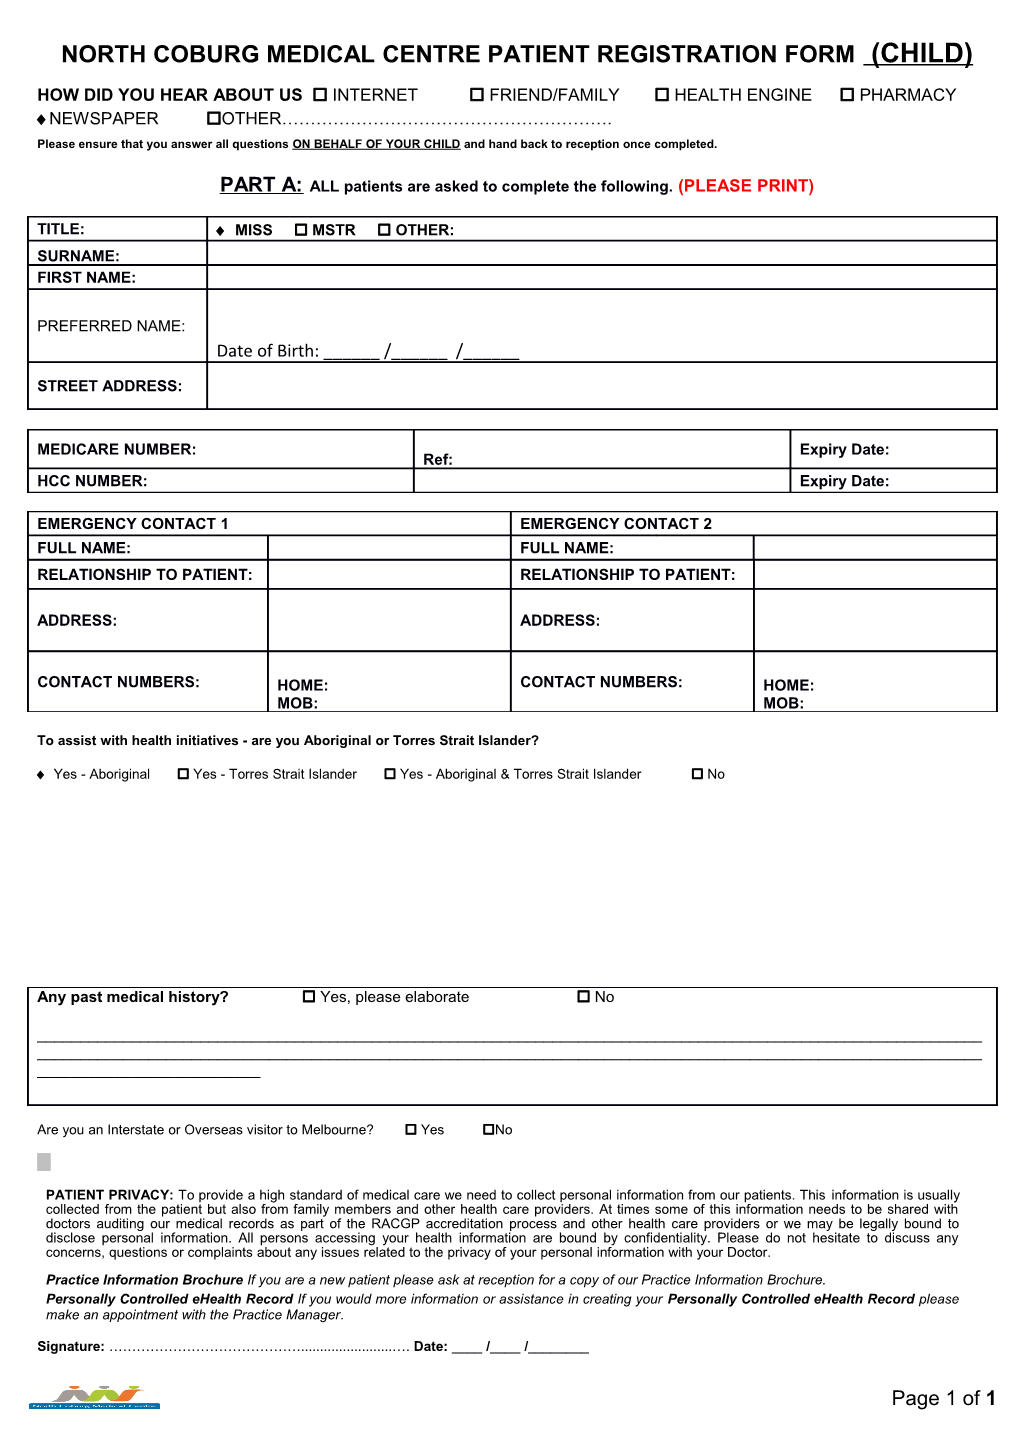 North Coburg Medical Centre Patientregistration Form (Child)